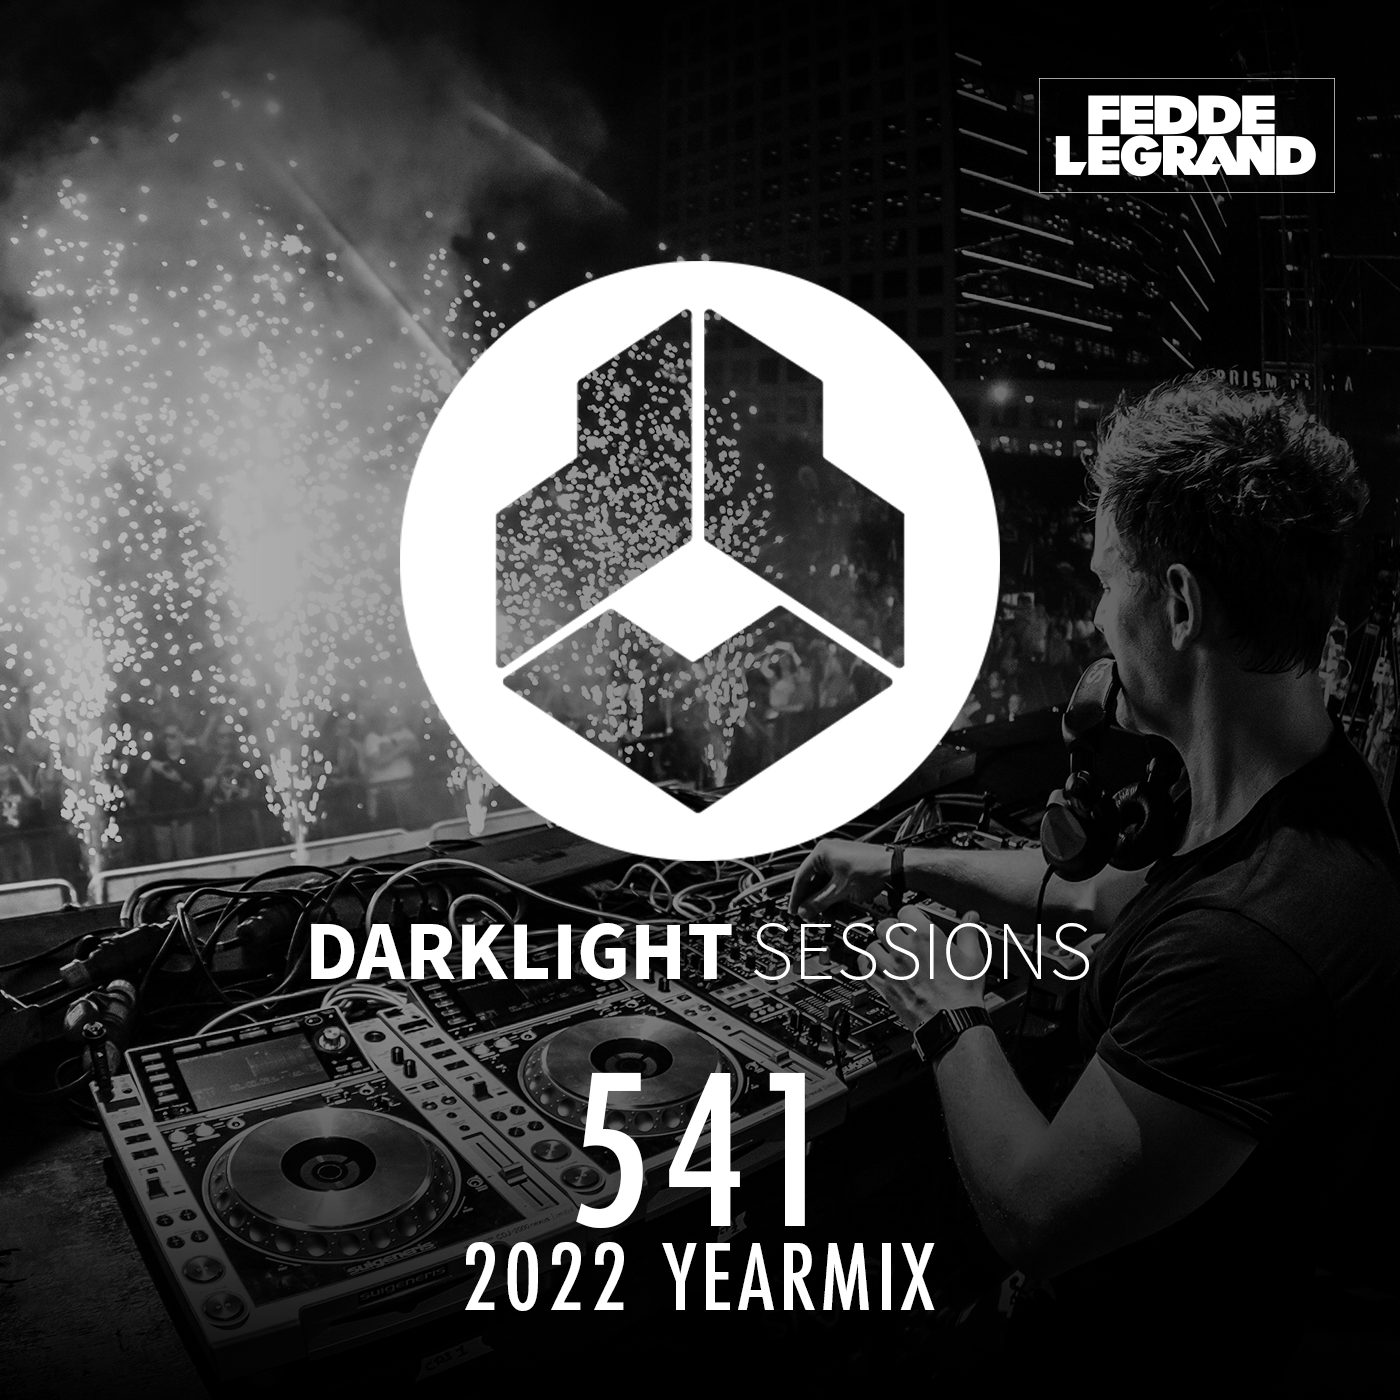 Darklight Sessions 541 (2022 YEARMIX)